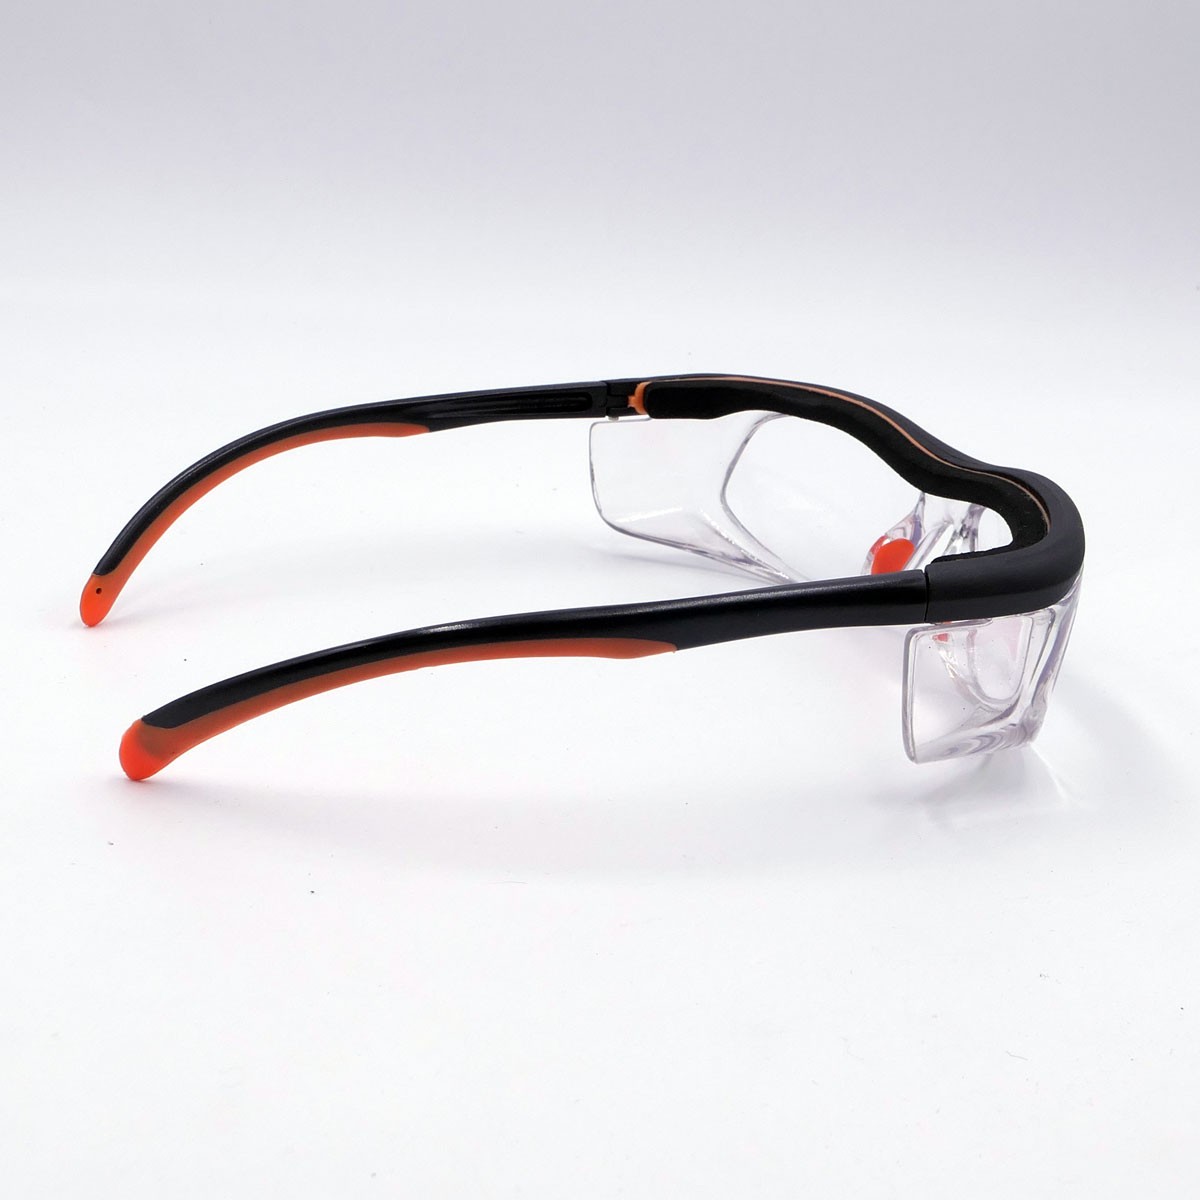 RX Lens Safety Glasses